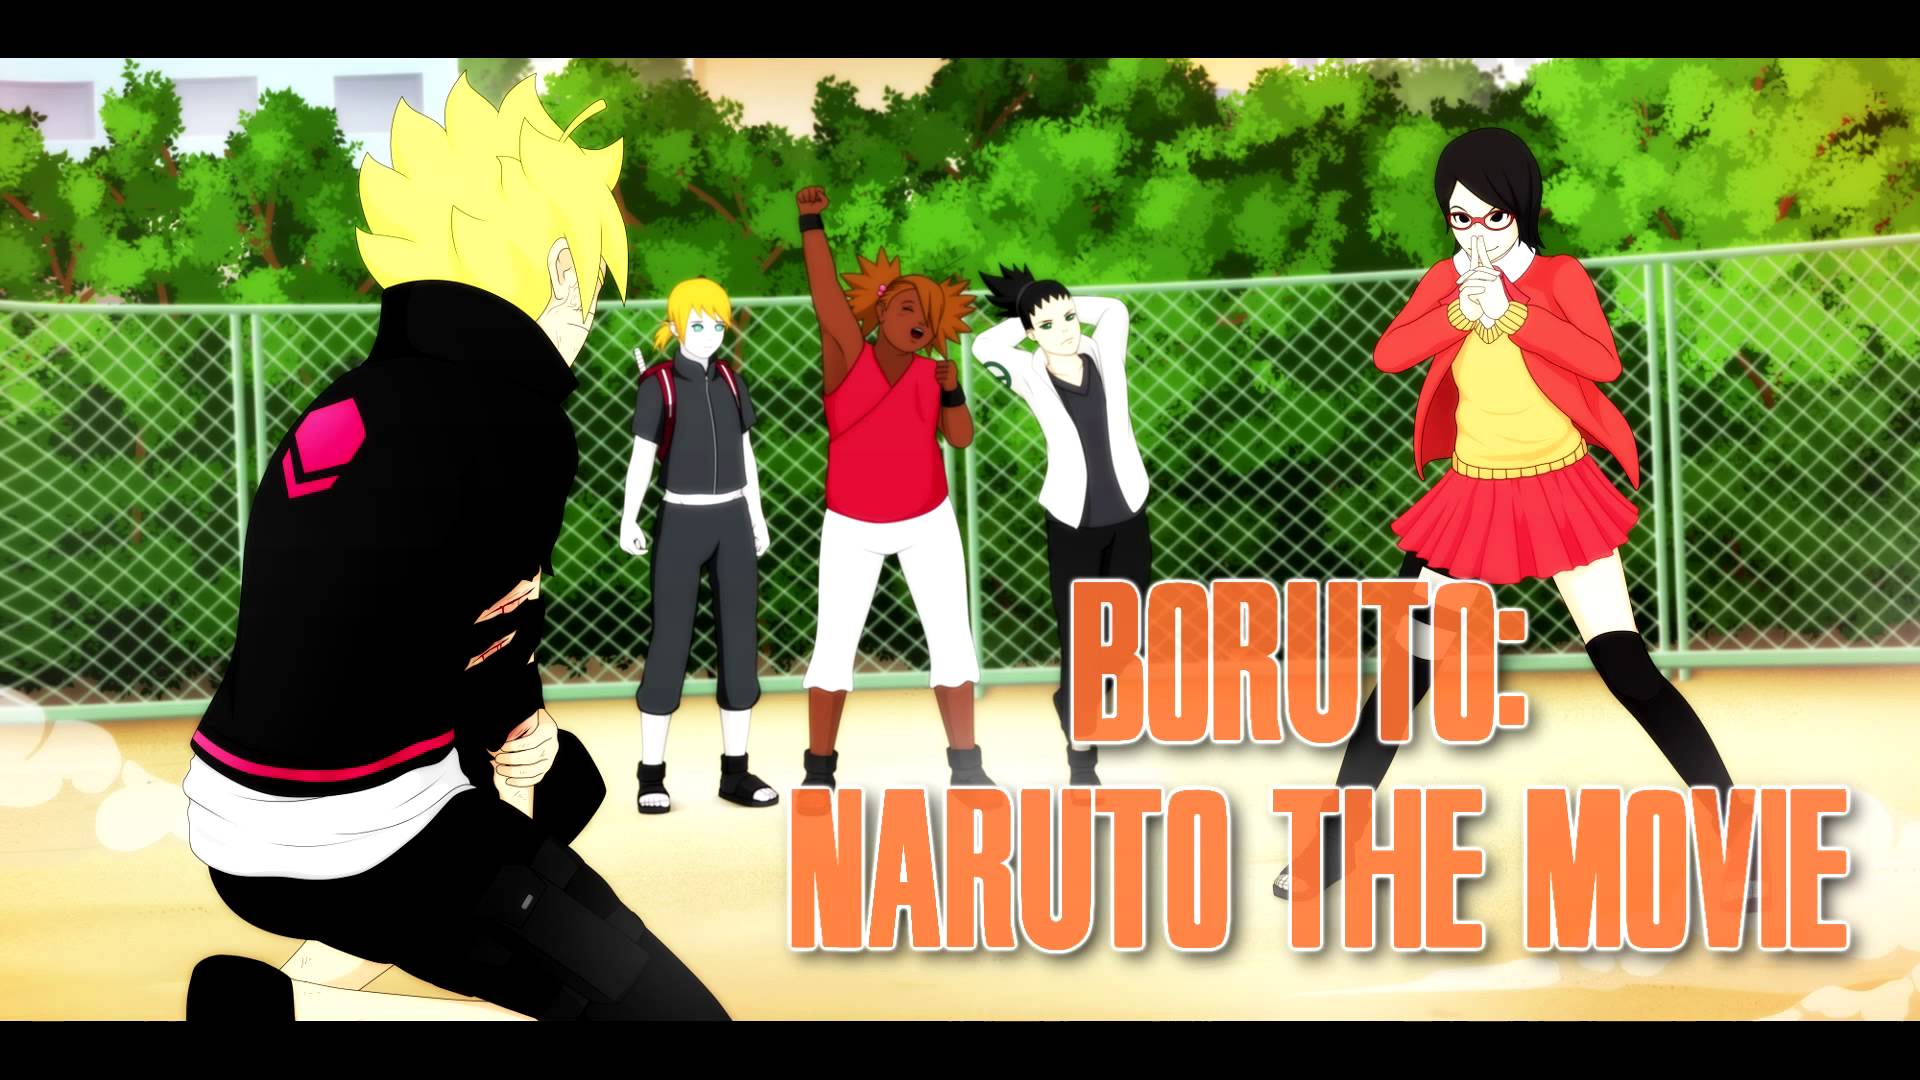 Naruto Part 3 & Boruto: Naruto the Movie & Discussion